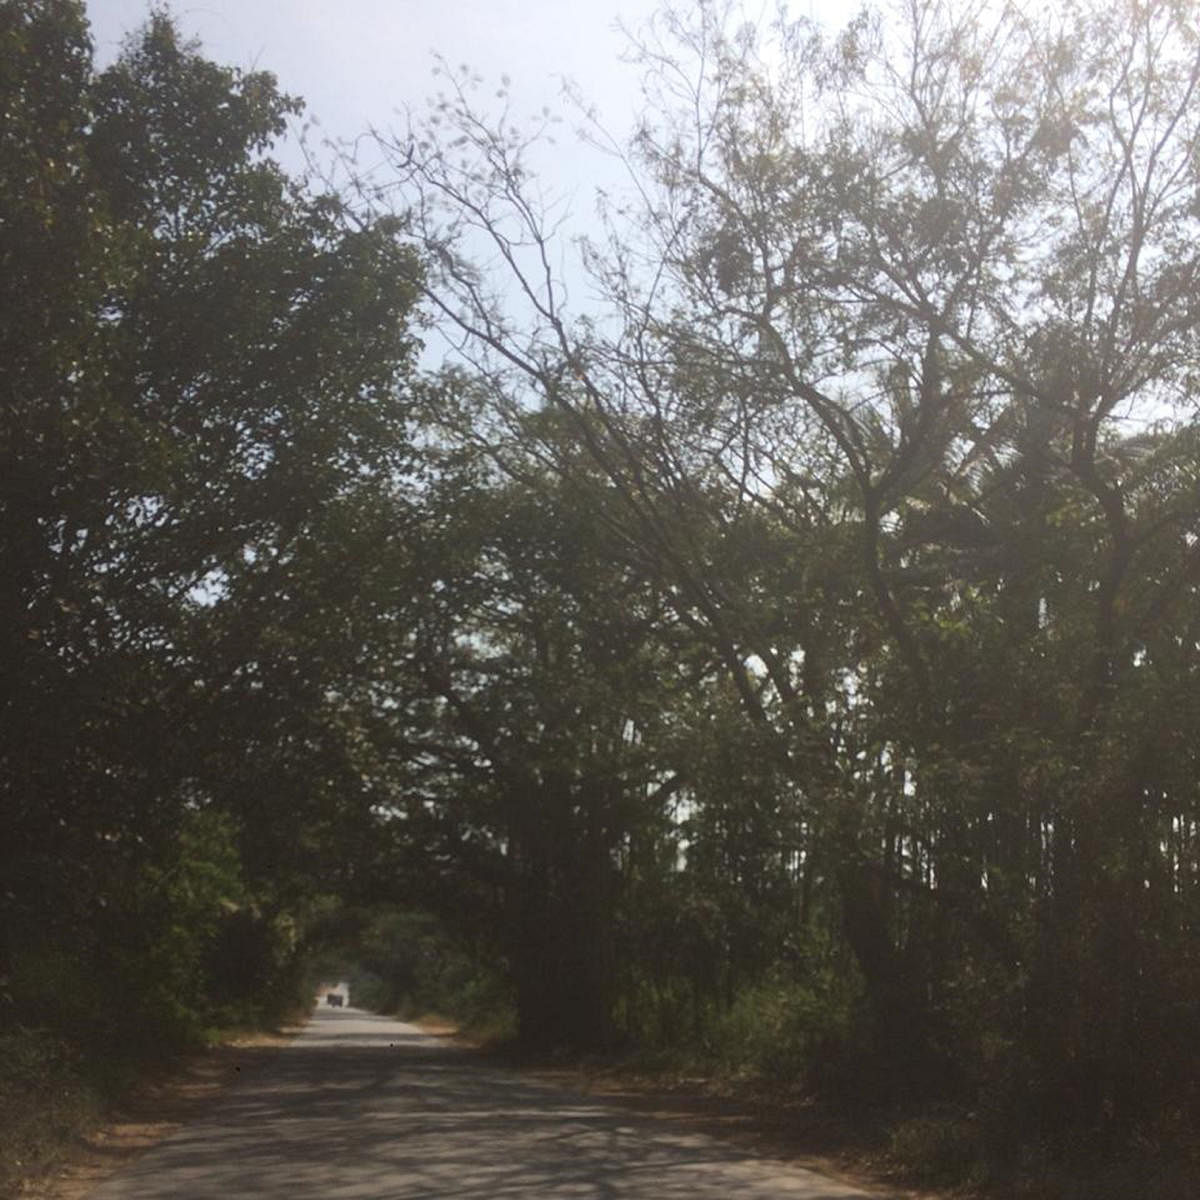 Trees on National Highway-206 passing through Bettadahalli in Terikere taluk in Chikkamagaluru.